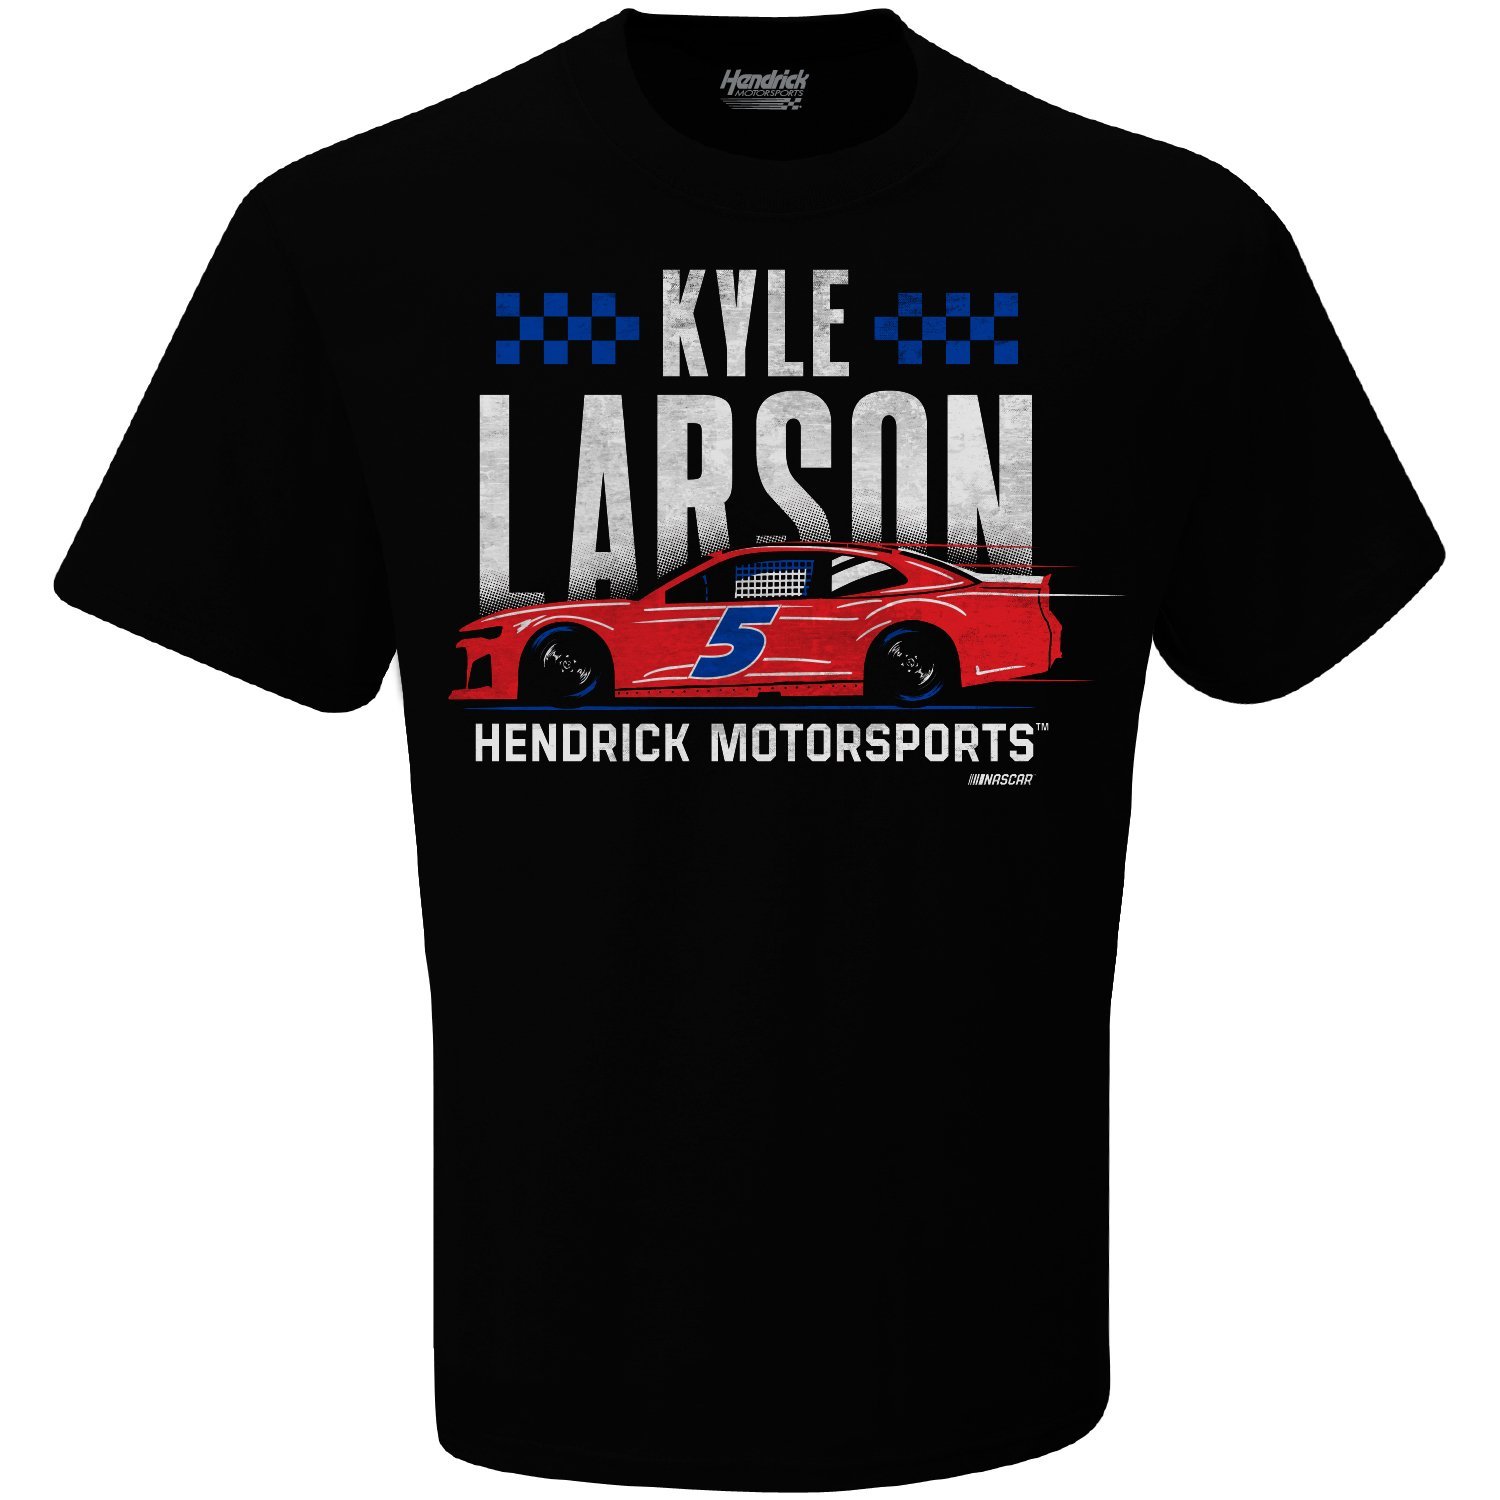 Kyle Larson - Hendrick Motorsports shirt